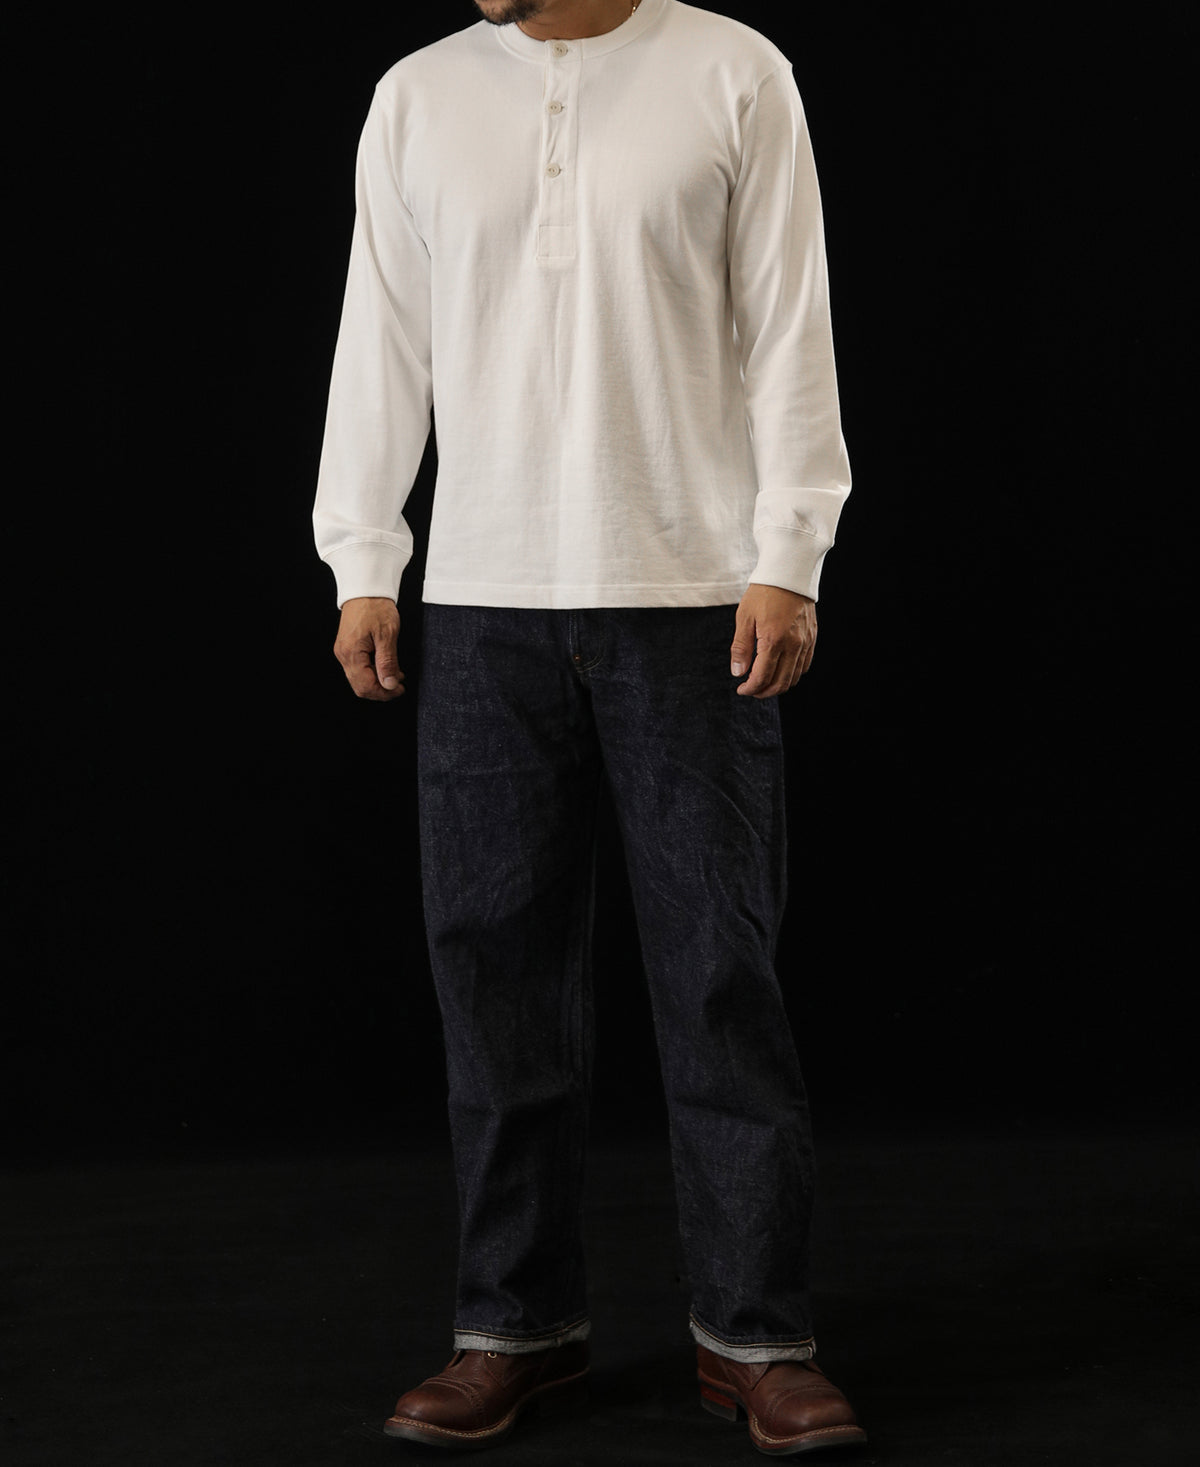 1930s 10.5 oz Cotton Loopwheel Tubular Henley Shirt - White